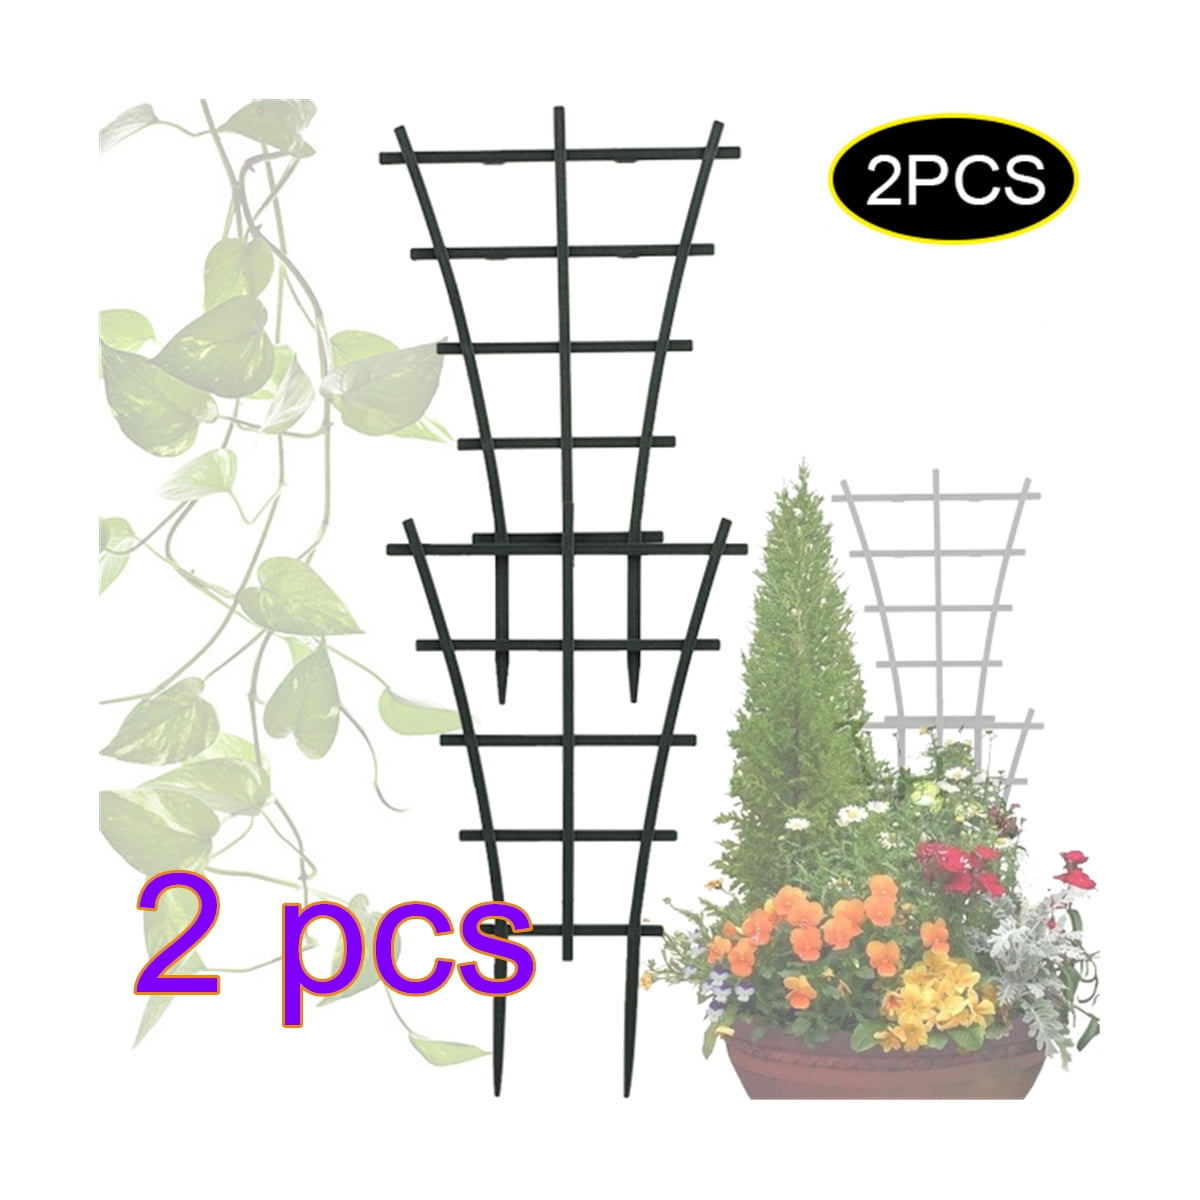 2 Pcs Plant Climbing Trellis DIY Garden Plastic Mini Superimposed Potted Support 